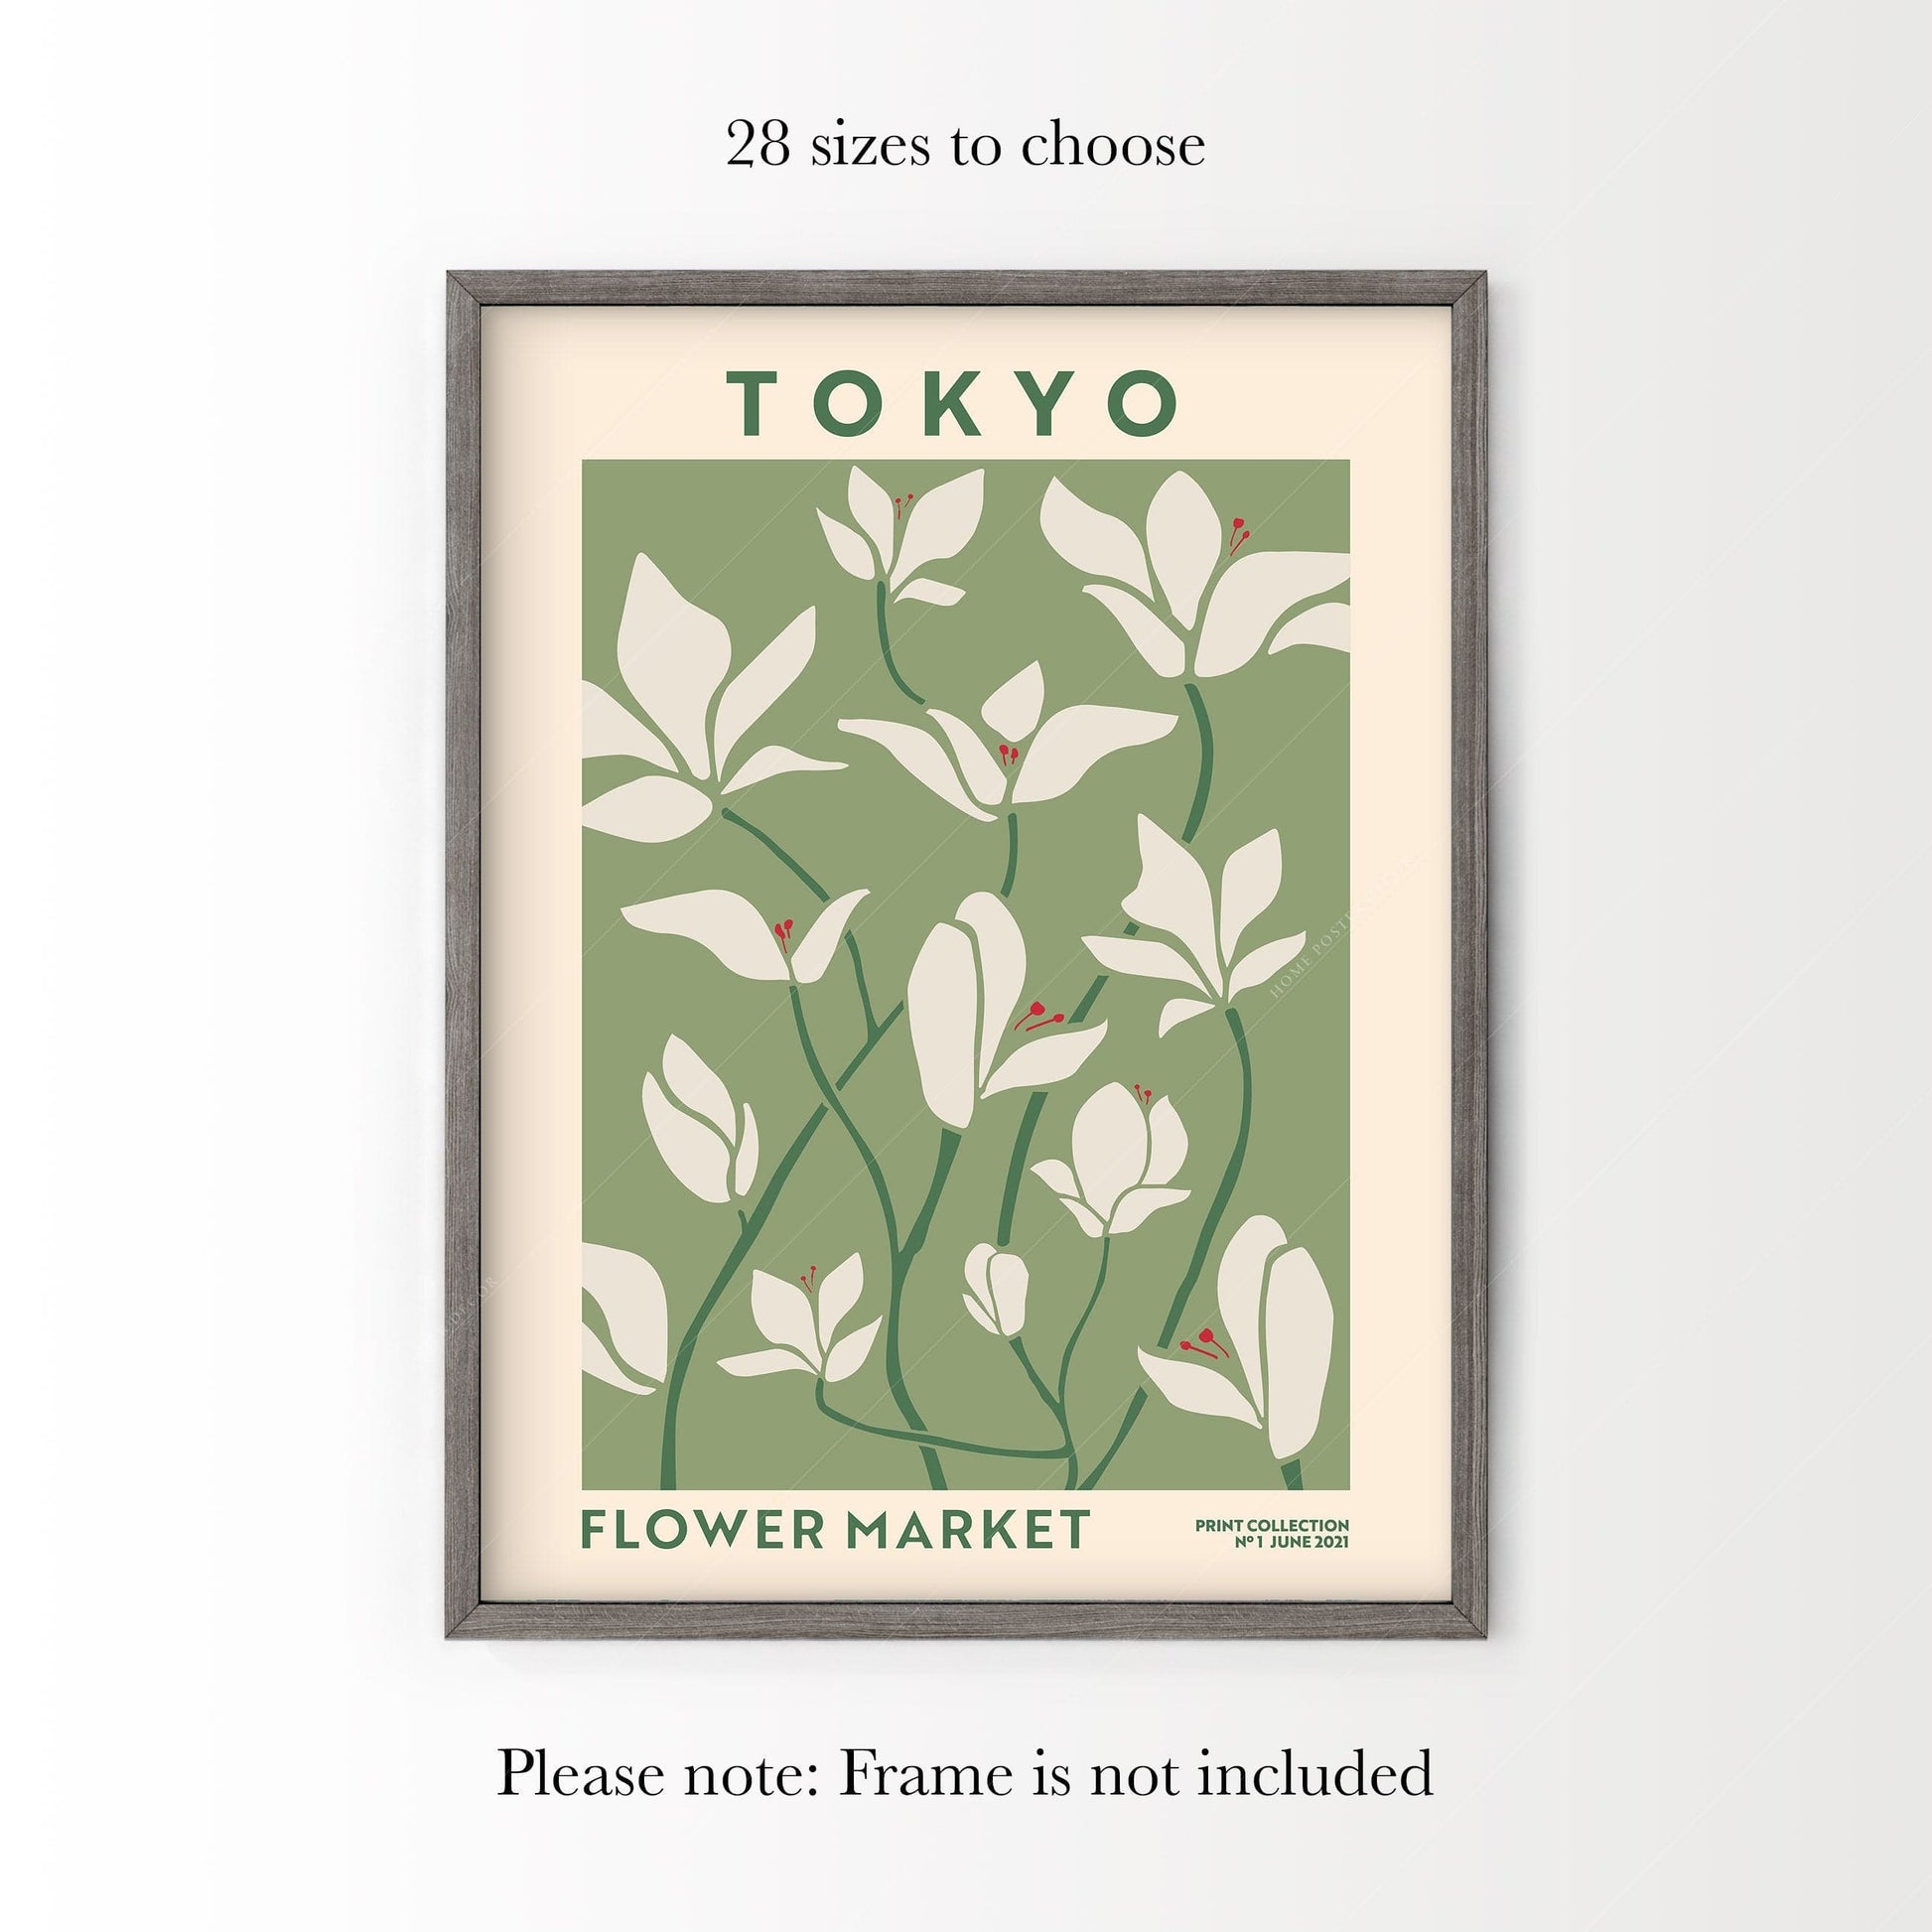 Home Poster Decor Single Flower Market Printed Shipped, Flower Market Tokyo, Floral Wall Art, Spring Wall Decor, Flower Market Poster, Retro Decor, Gift Idea